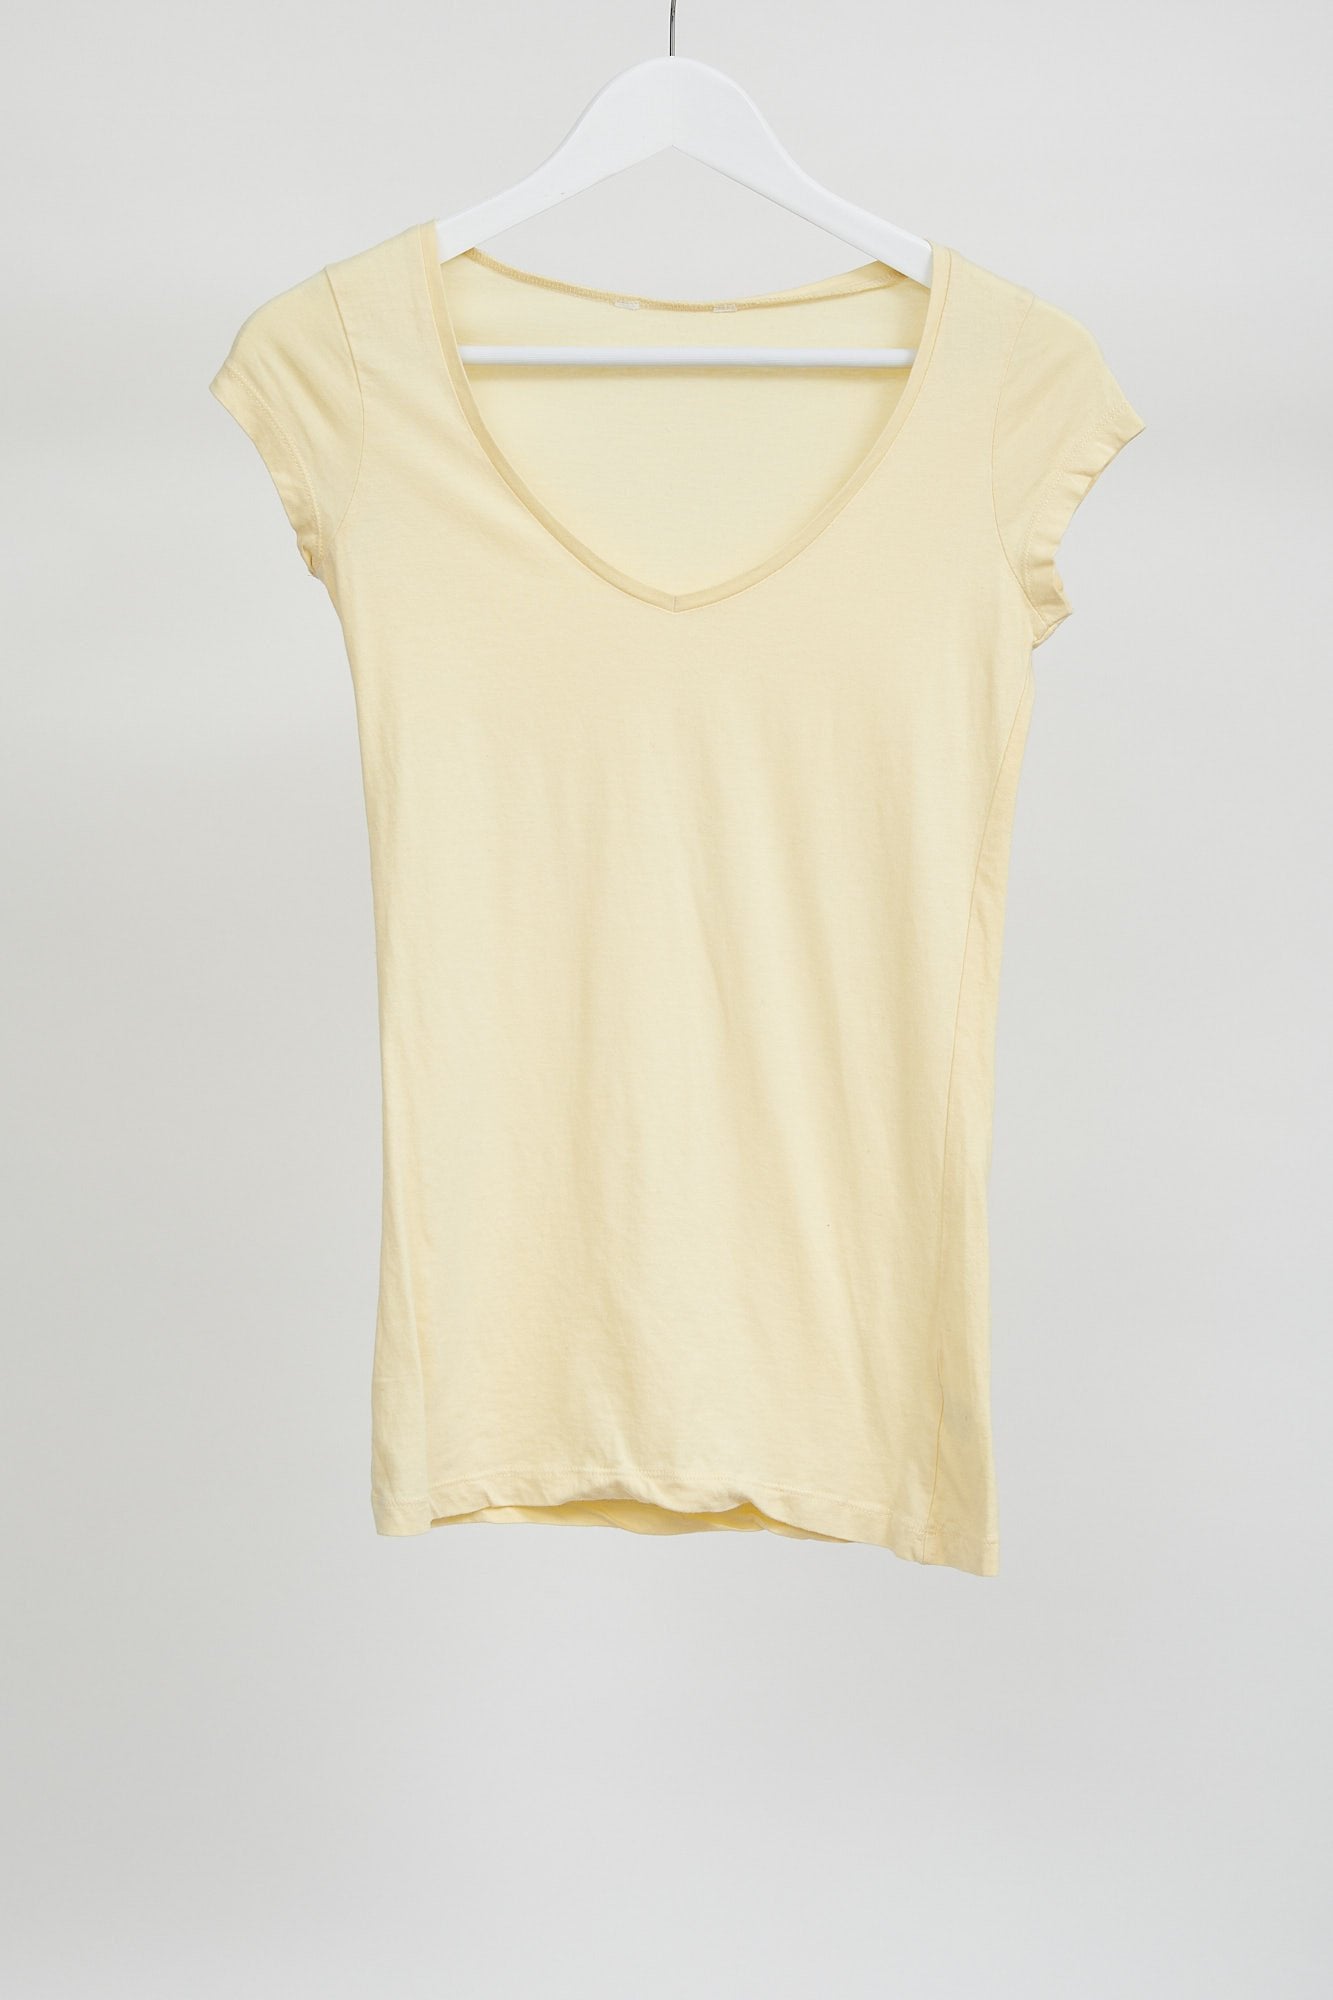 Womens Yellow Short Sleeve T-Shirt: Size Small